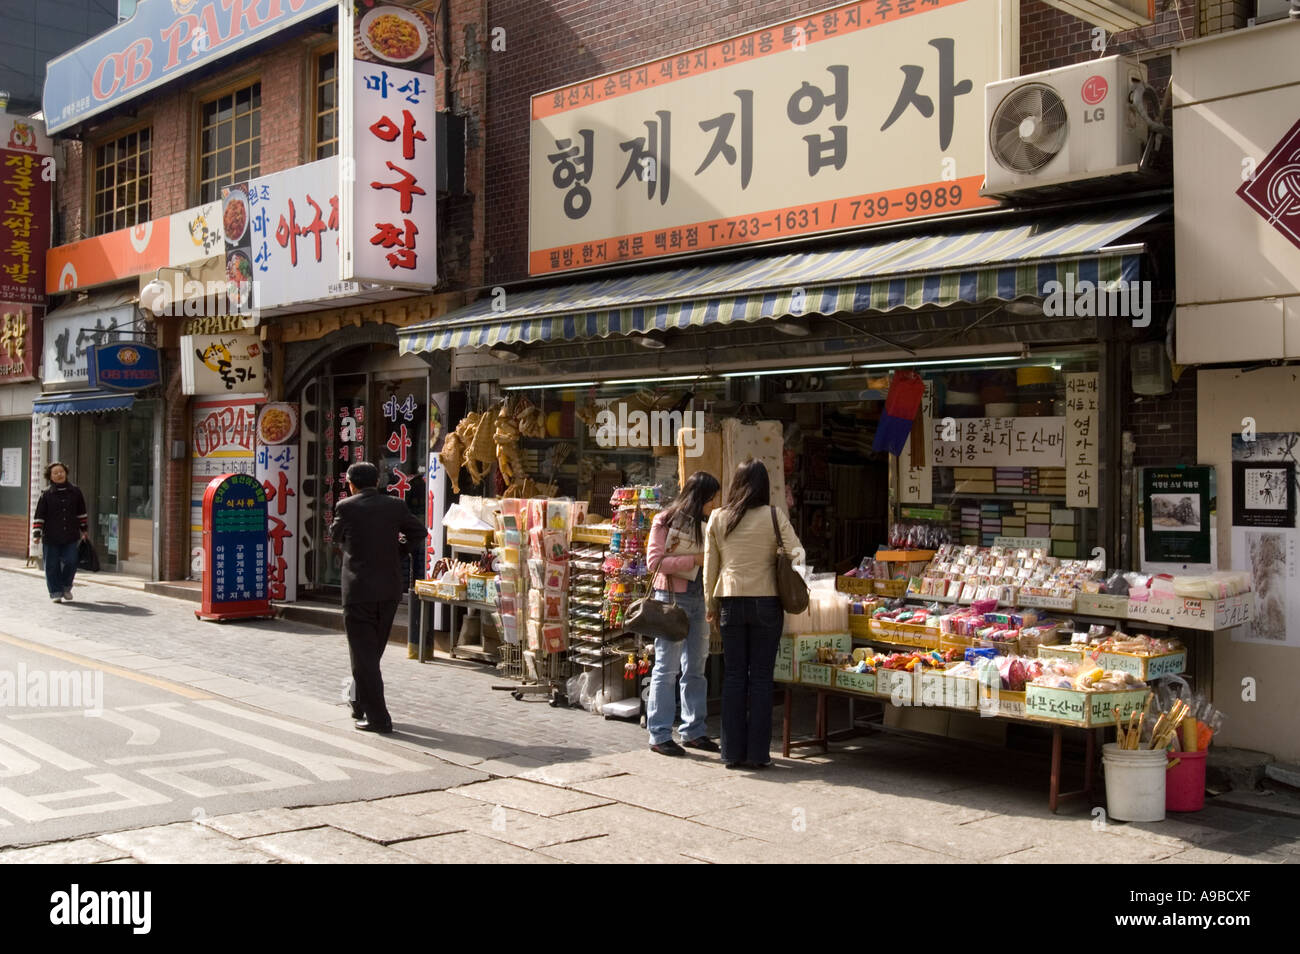 Shopping in Seoul, South Korea's Insadong neighborhood. Stock Photo